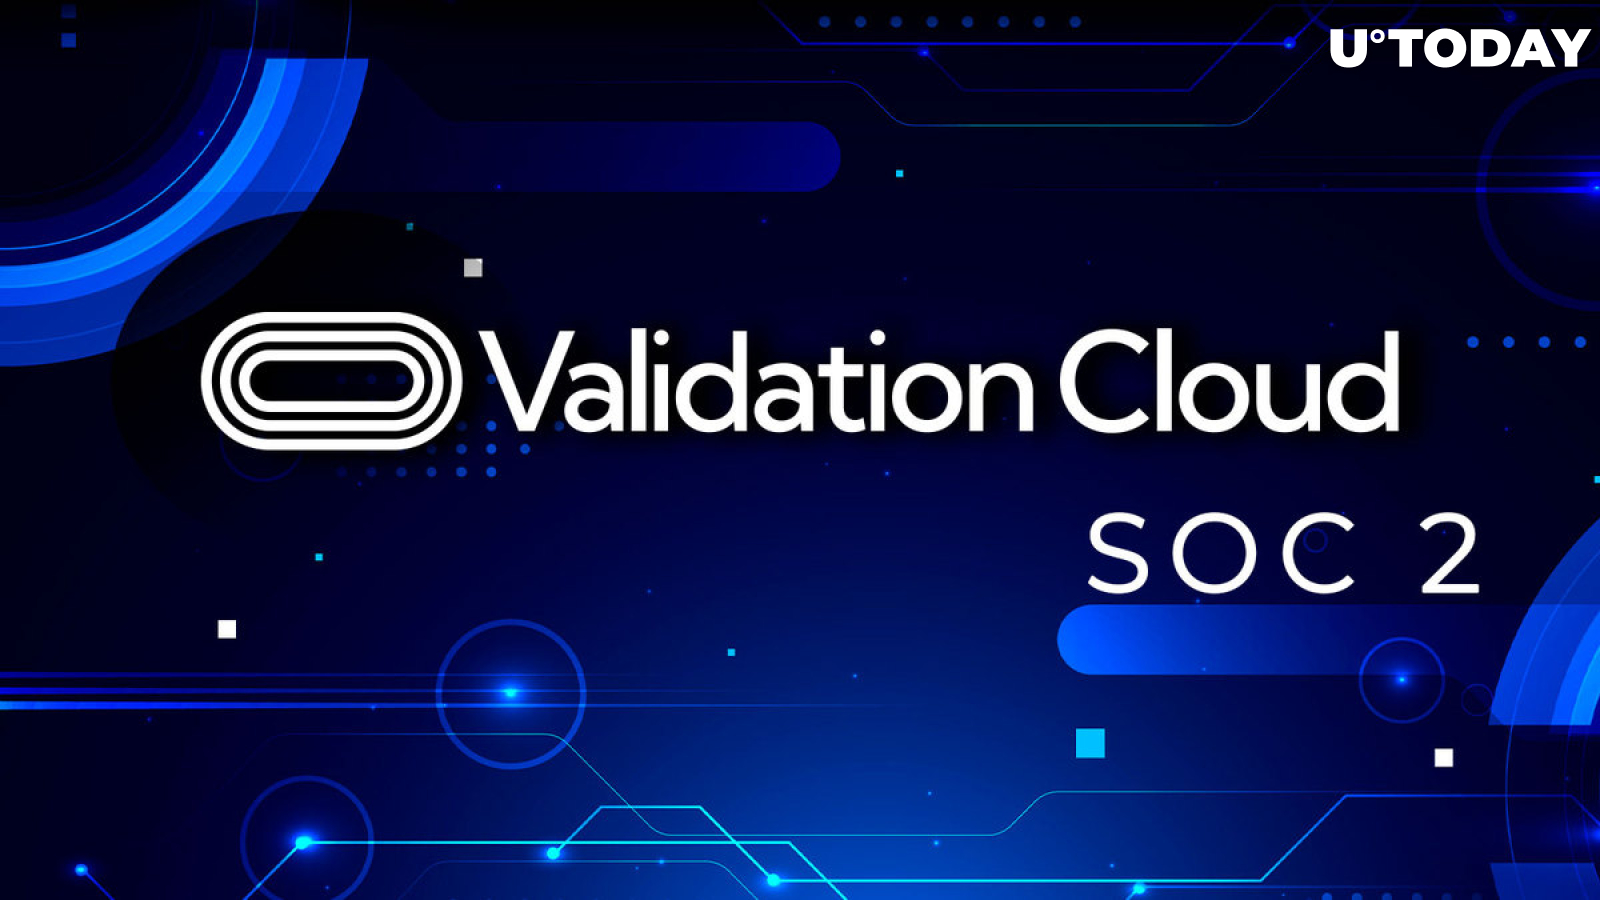 Validation Cloud Web3 Platform Completes SOC 2 Audit